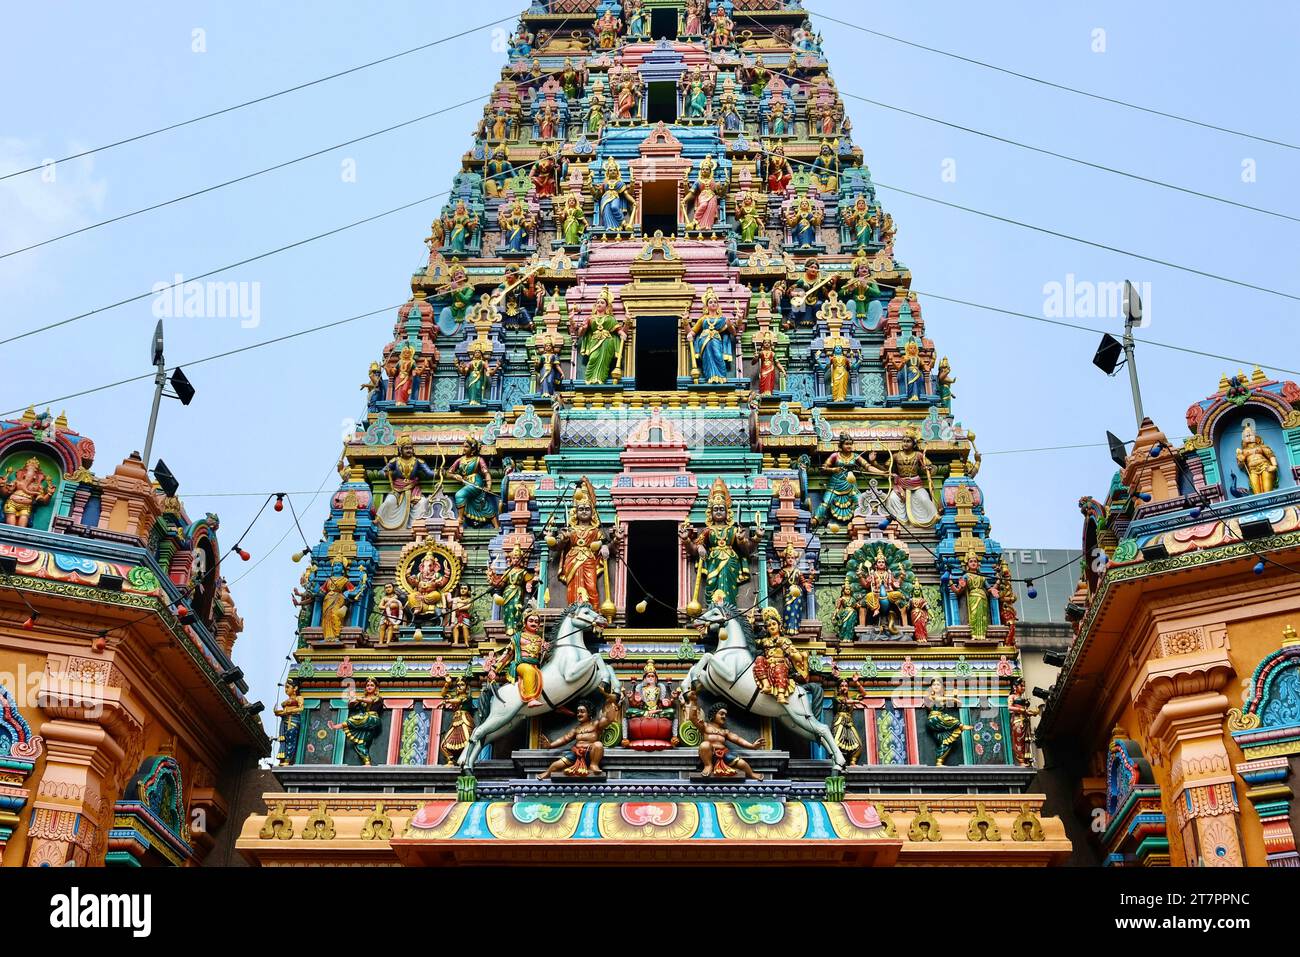 Ornare South Indian-style Raja Gopuram tower at Sri Mahamariamman Temple on a sunny day with clear blue skies - Jalan Bandar, Kuala Lumpur Chinatown Stock Photo